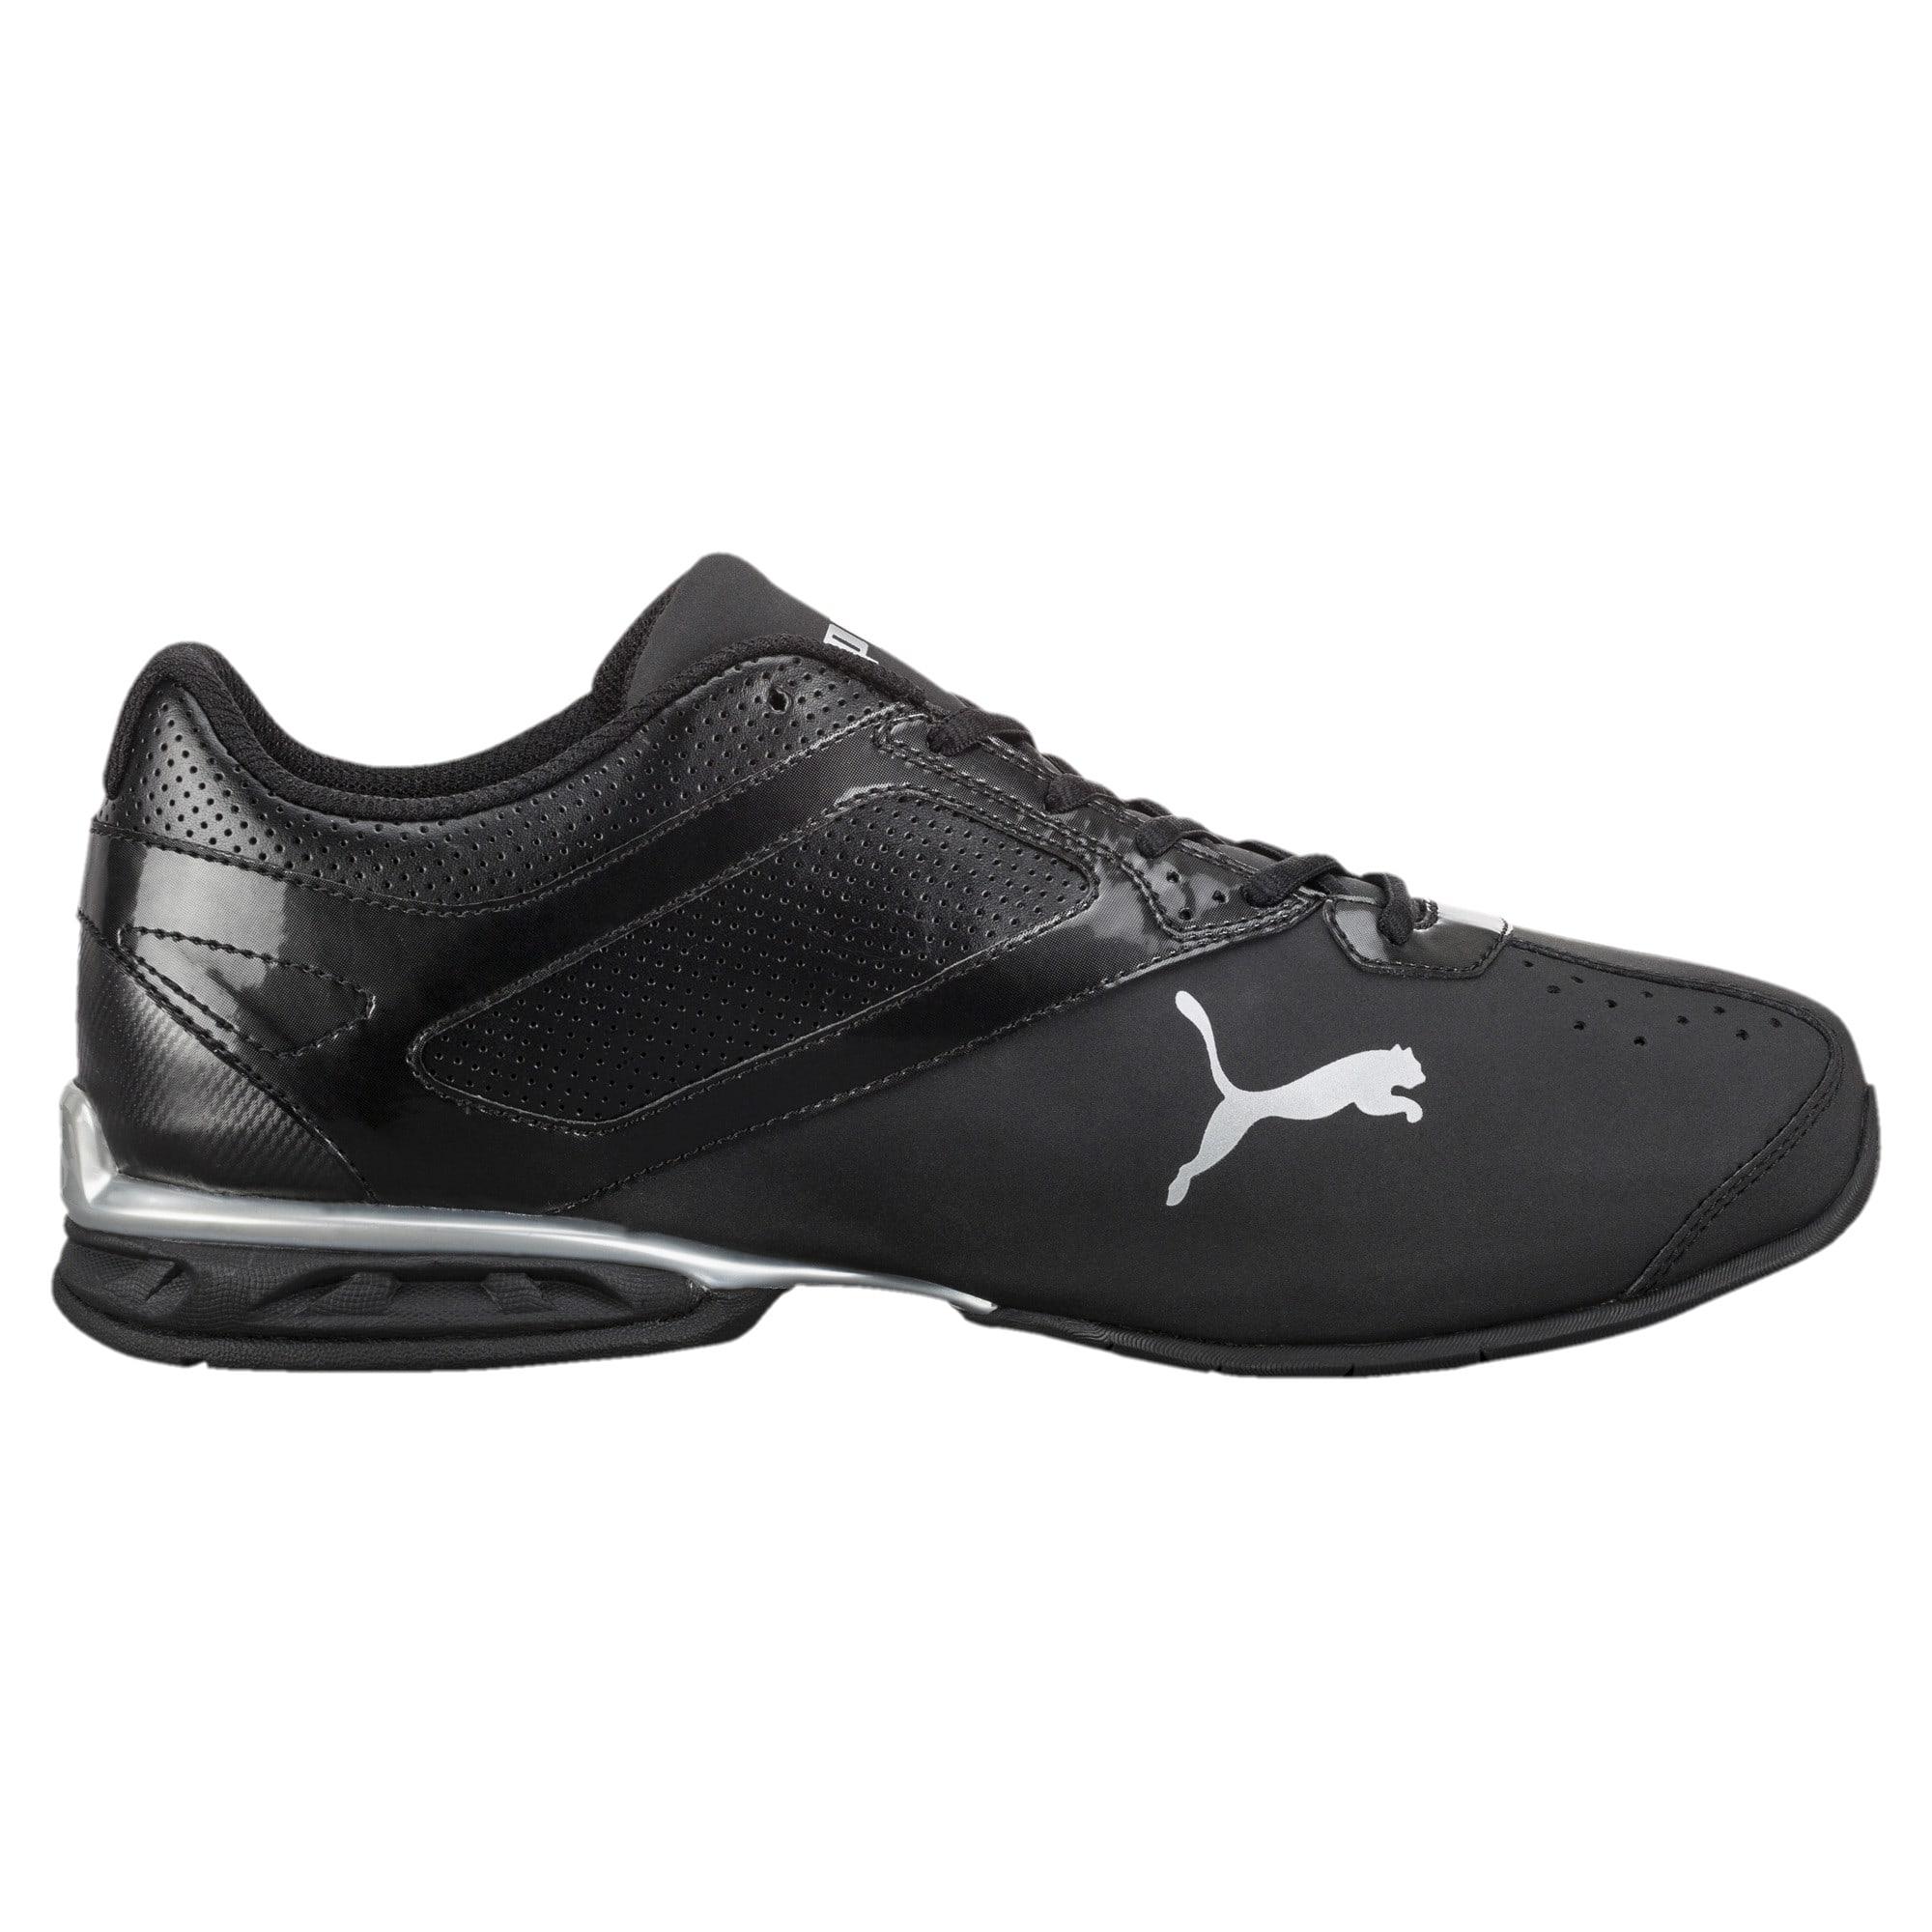 PUMA Synthetic Tazon 6 Fm Men's Sneakers in 03 (Black) for Men - Lyst